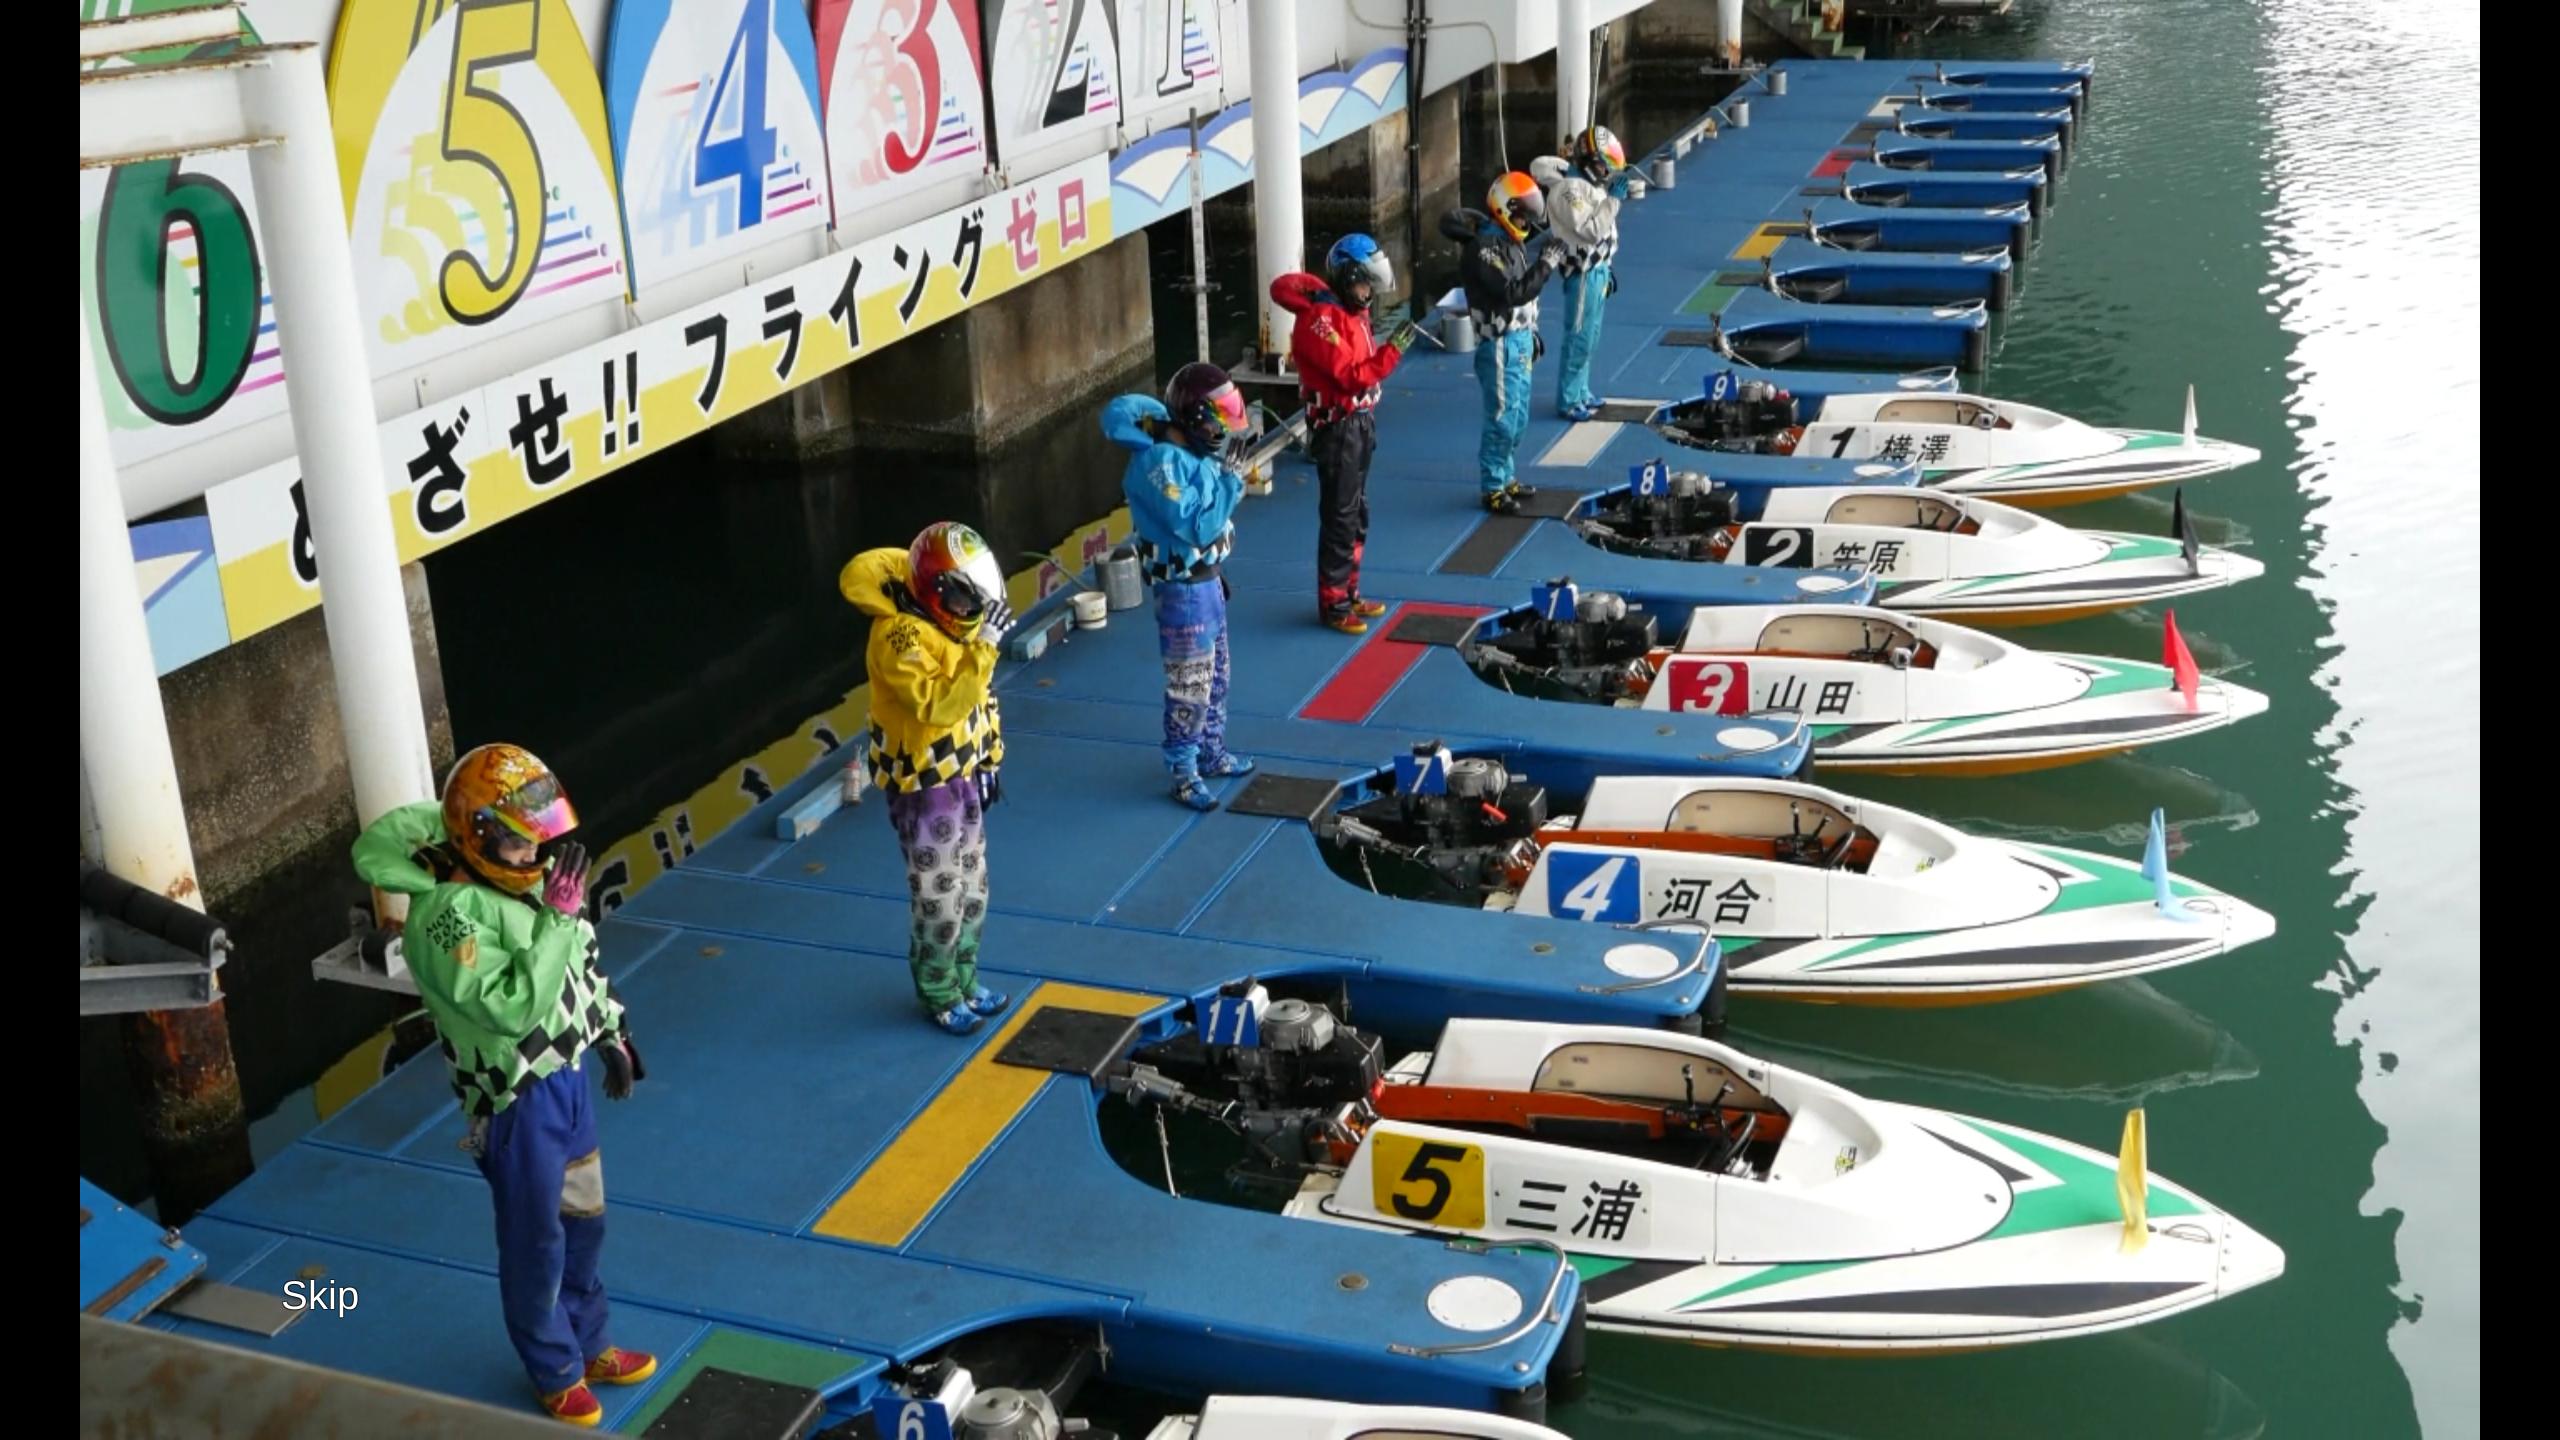 Android Icin Boat Race浜名湖公式アプリ 360 Vrボートレース Apk Yi Indir